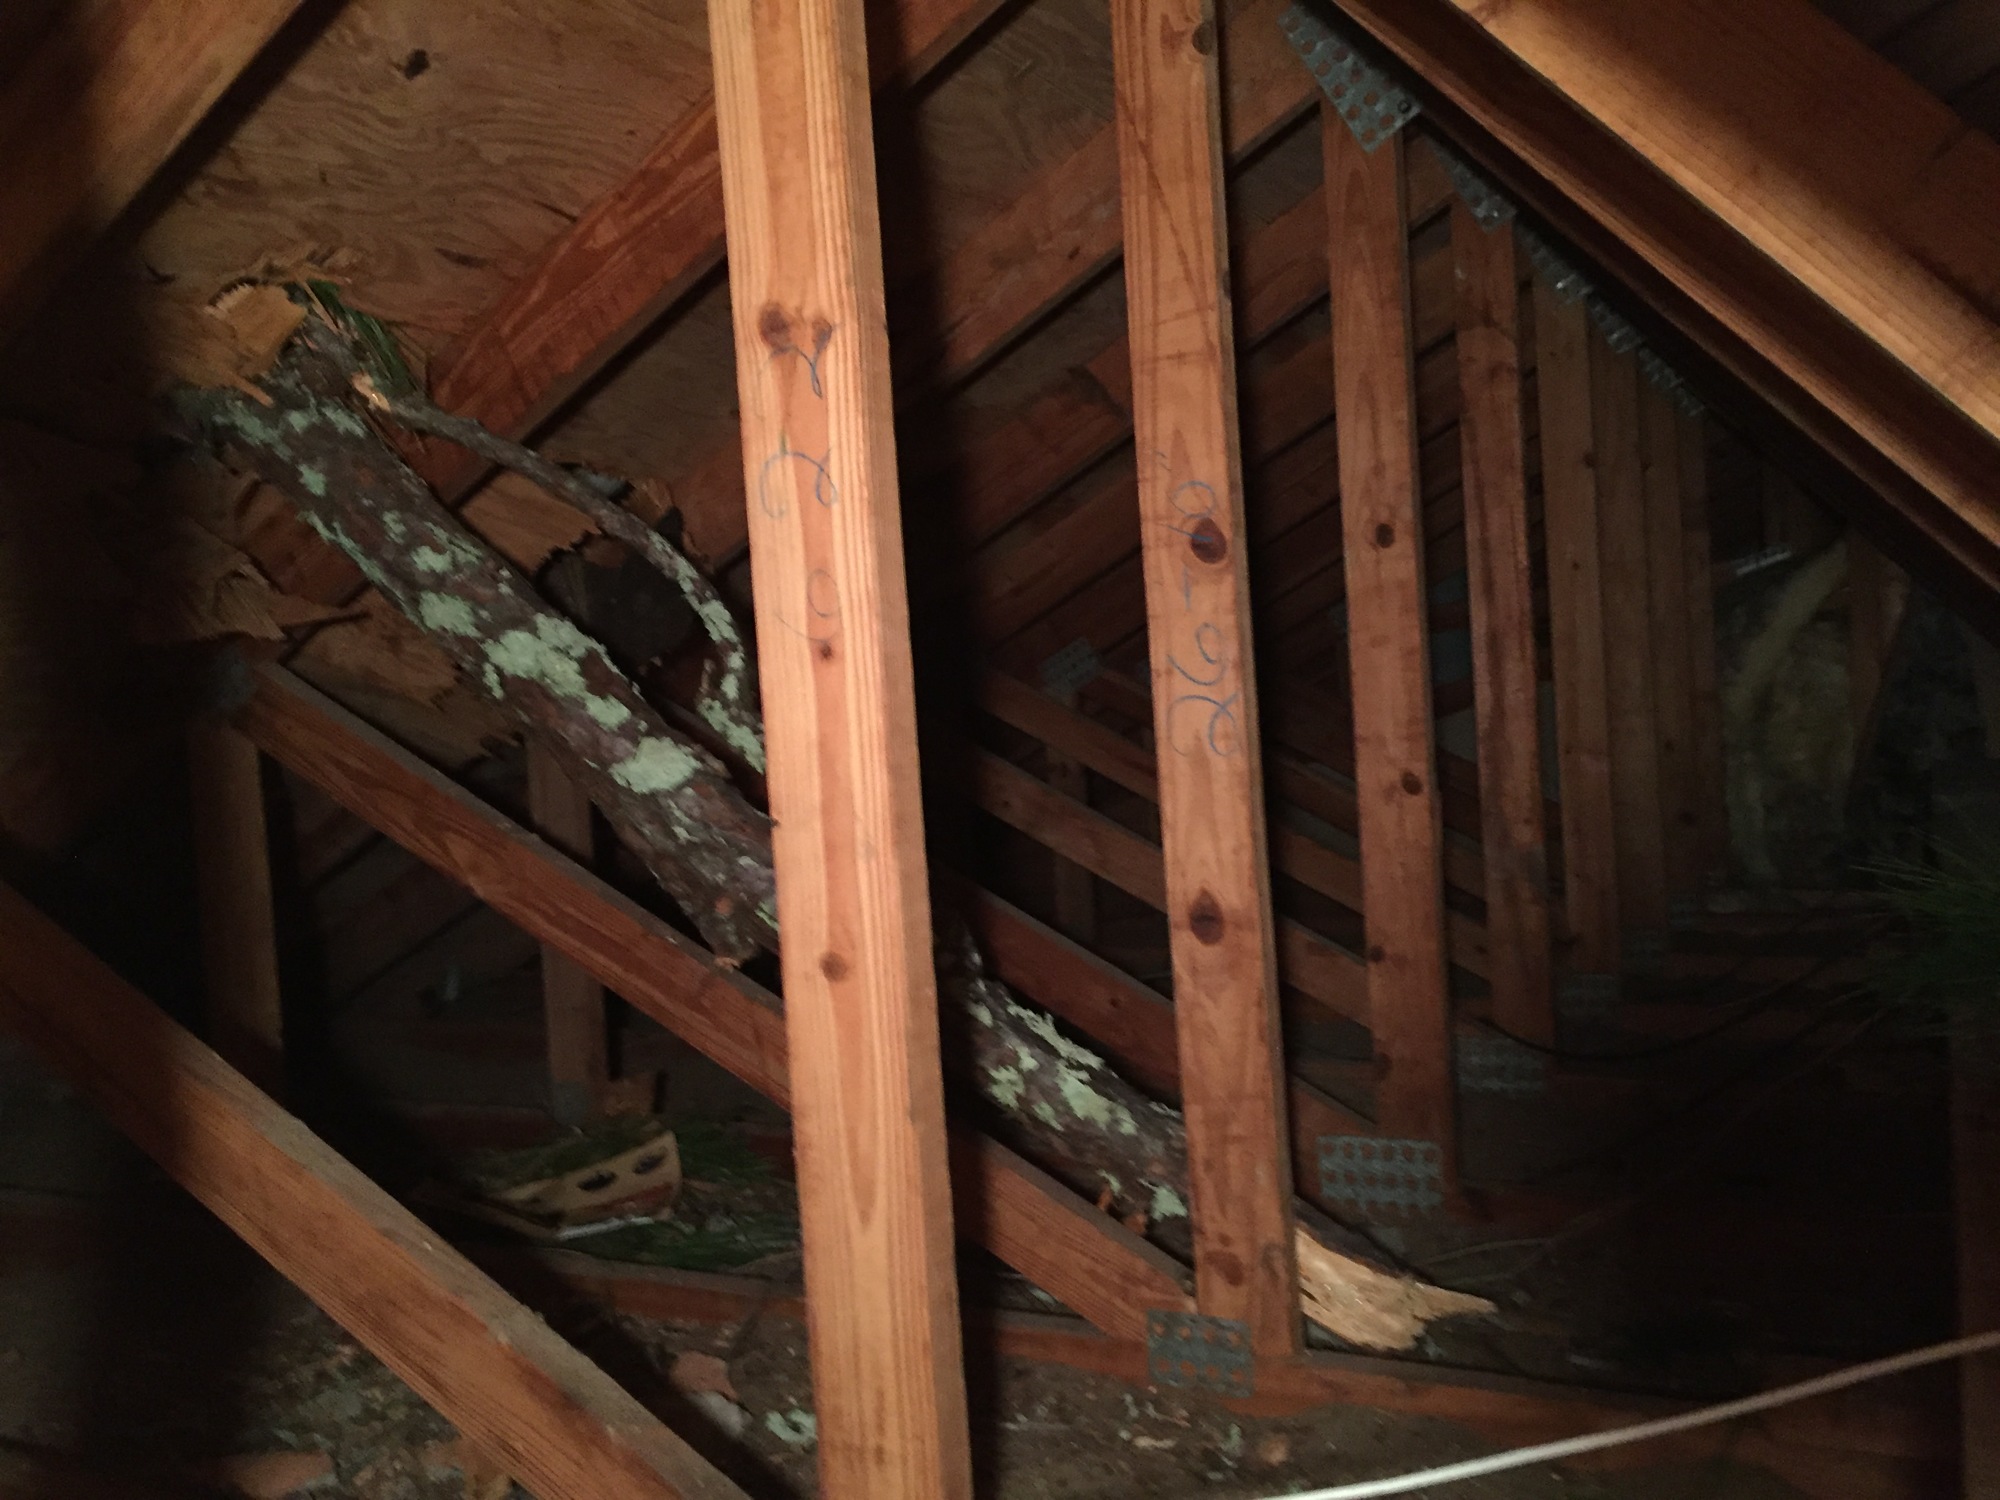 One limb pierced the attic. (Courtesy photo)